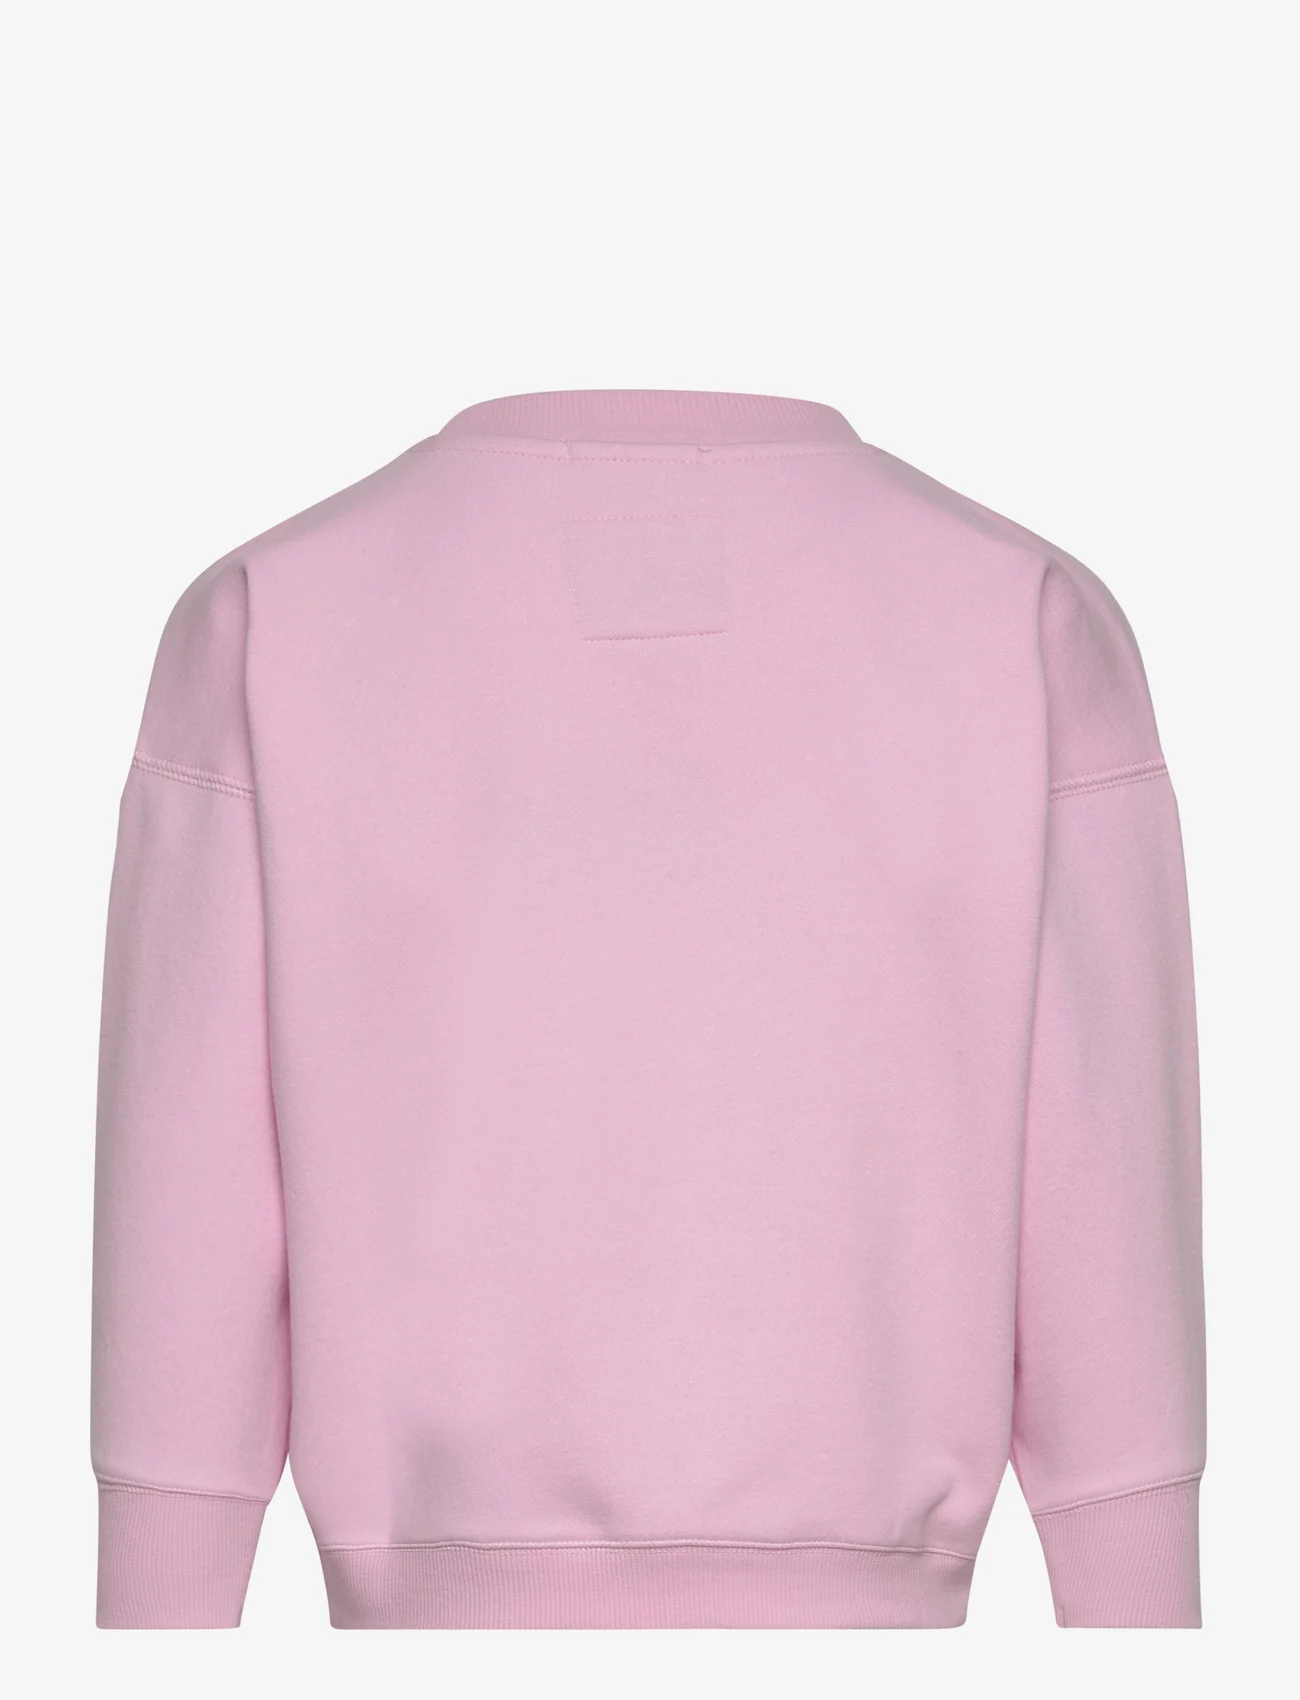 Tom Tailor - smiley sweatshirt - sweatshirts - sweet pink - 1